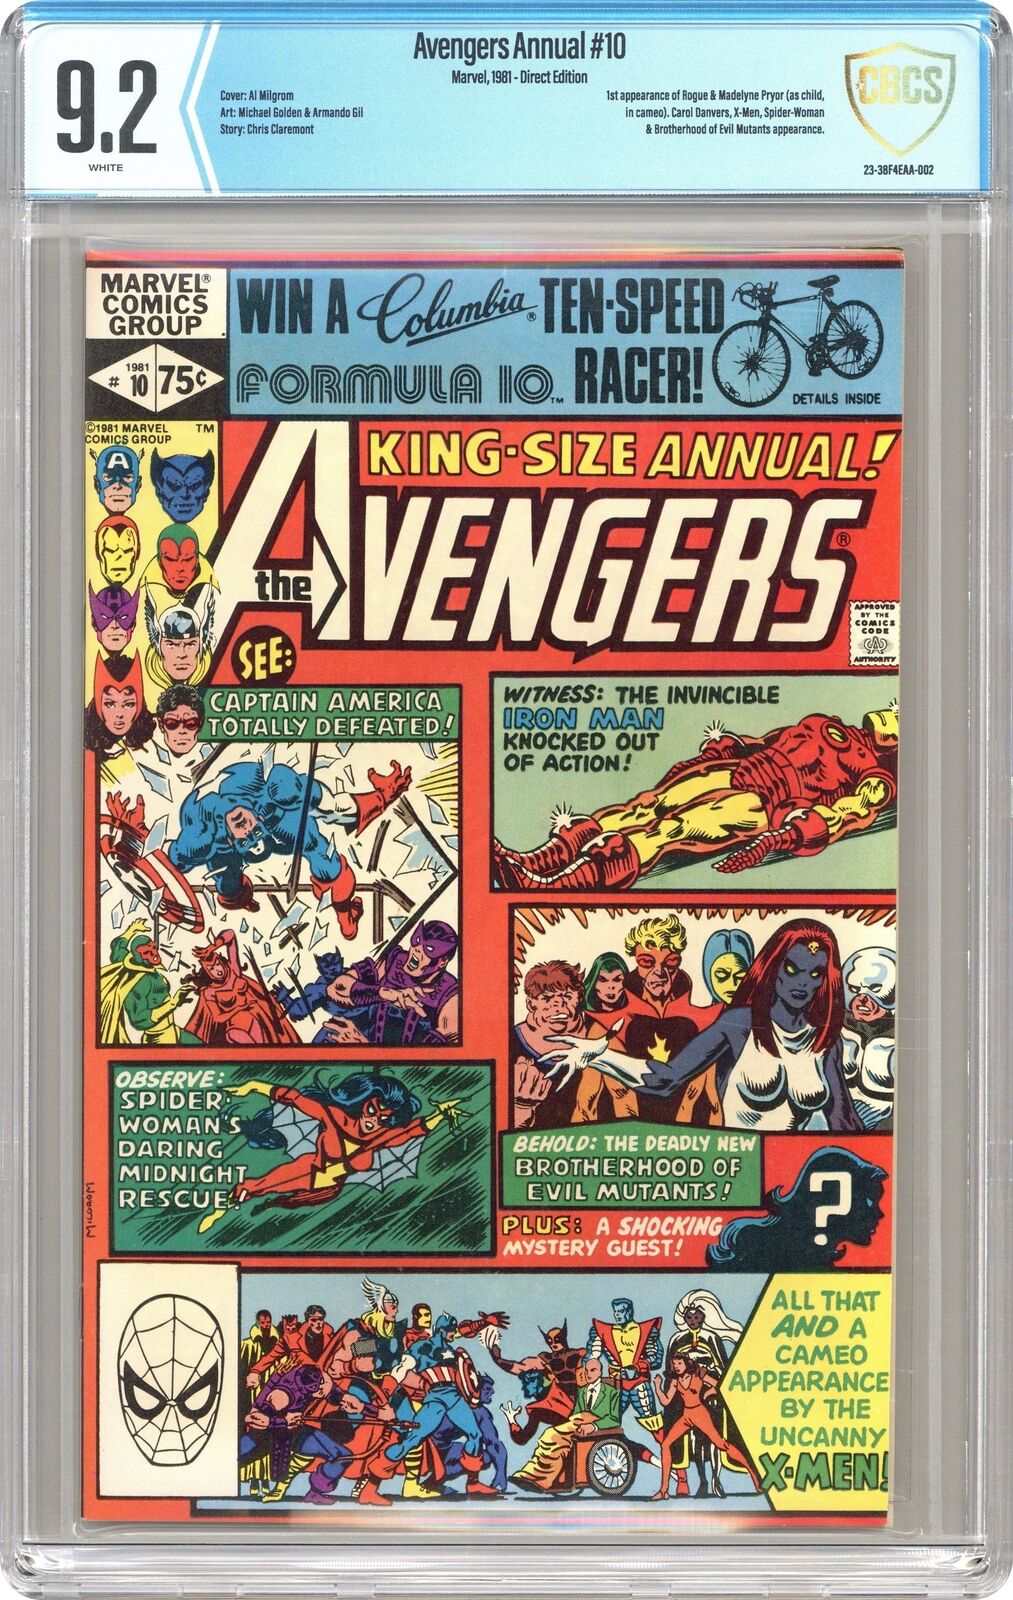 Avengers Annual #10 CBCS 9.2 1981 23-38F4EAA-002 1st app. Rogue, Madelyne Pryor